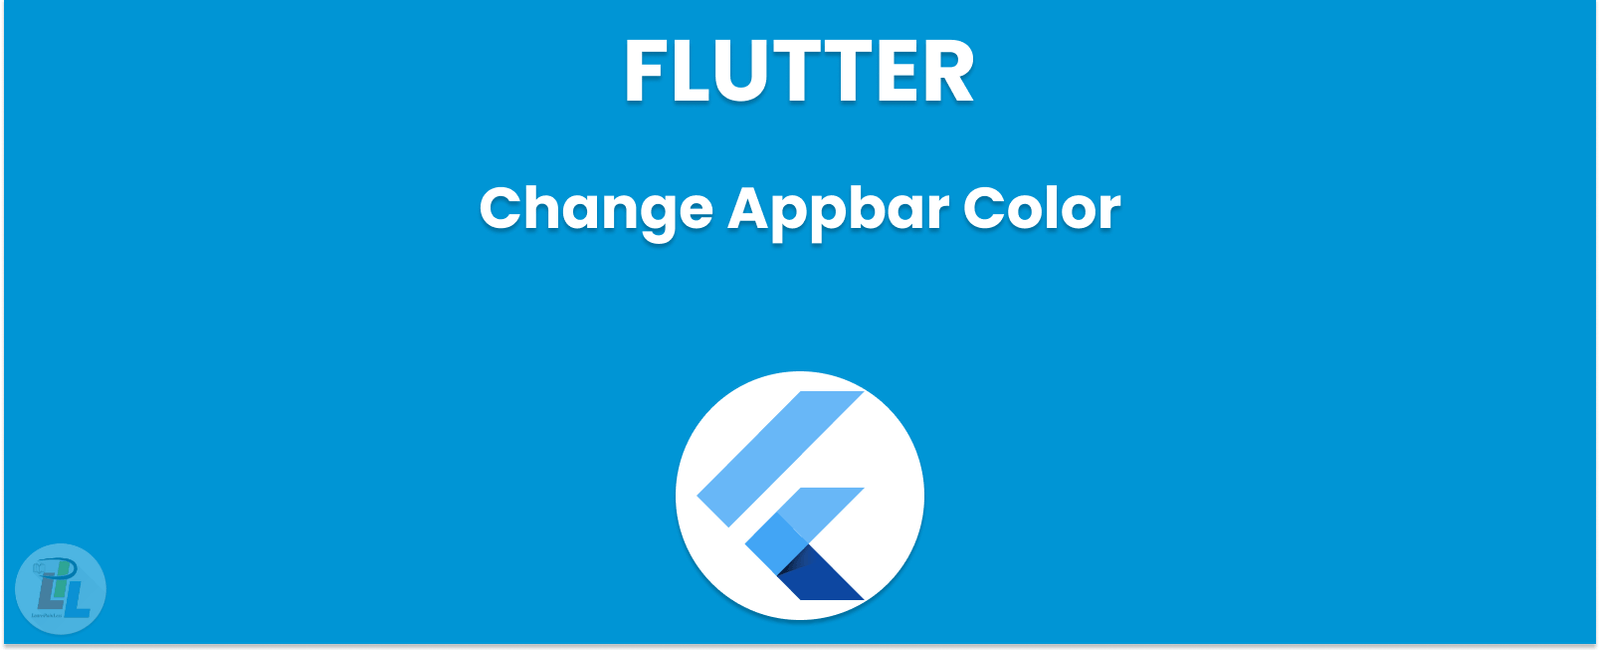 How to Change Appbar Color in Flutter